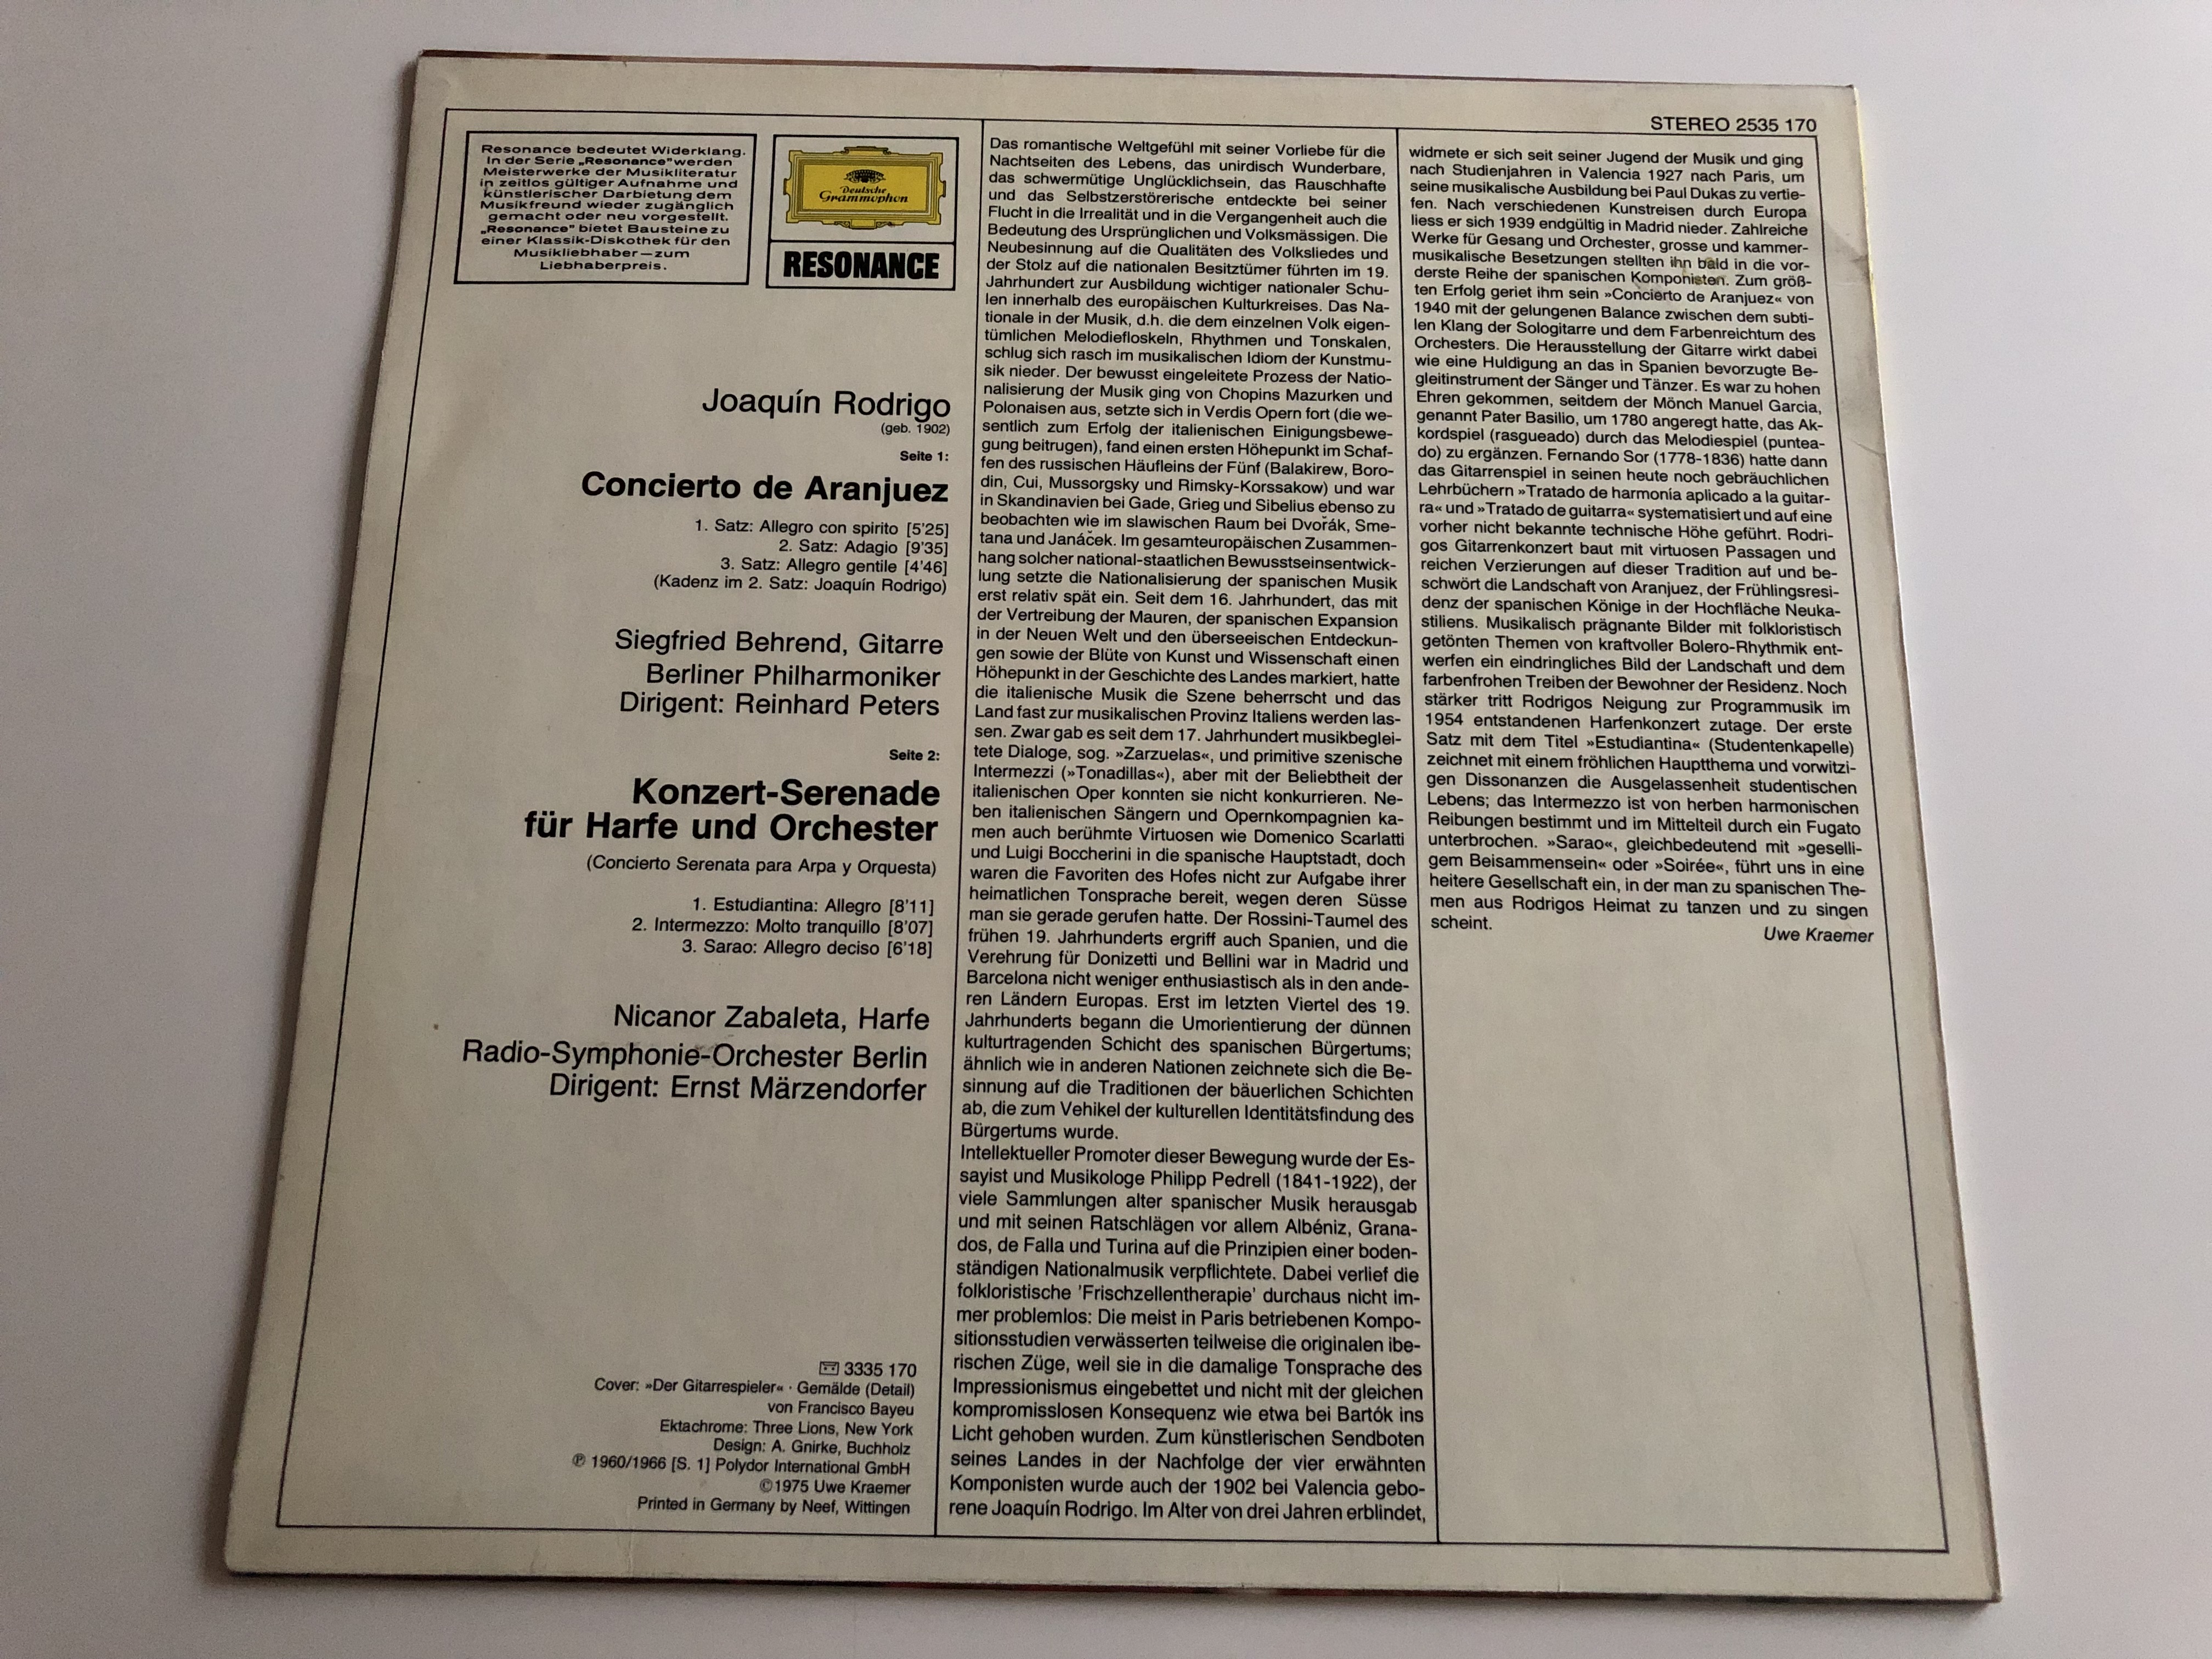 rodrigo-concierto-de-aranjuez-konzertserenade-f-r-harfe-siegfried-behrend-nicanor-zabaleta-deutsche-grammophon-lp-stereo-2535-170-2-.jpg